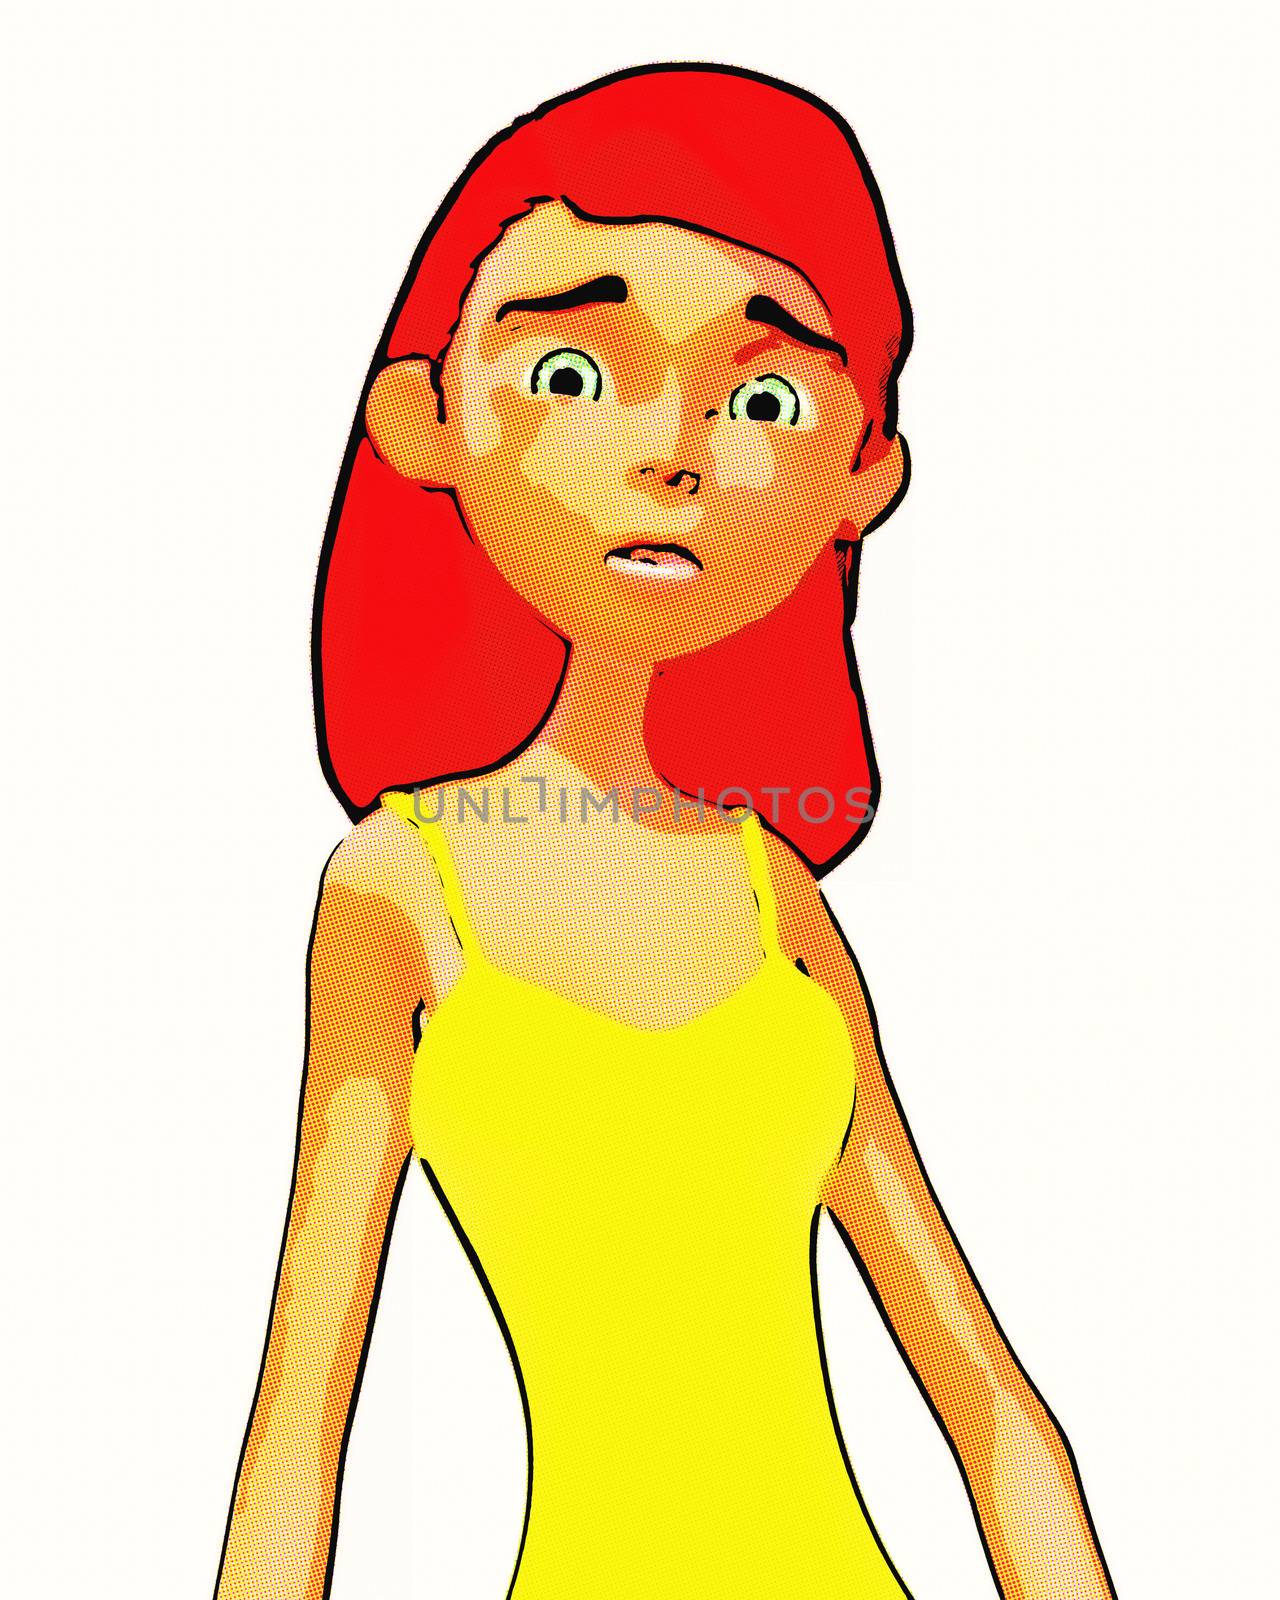 Digital Illustration of a Cartoon Woman